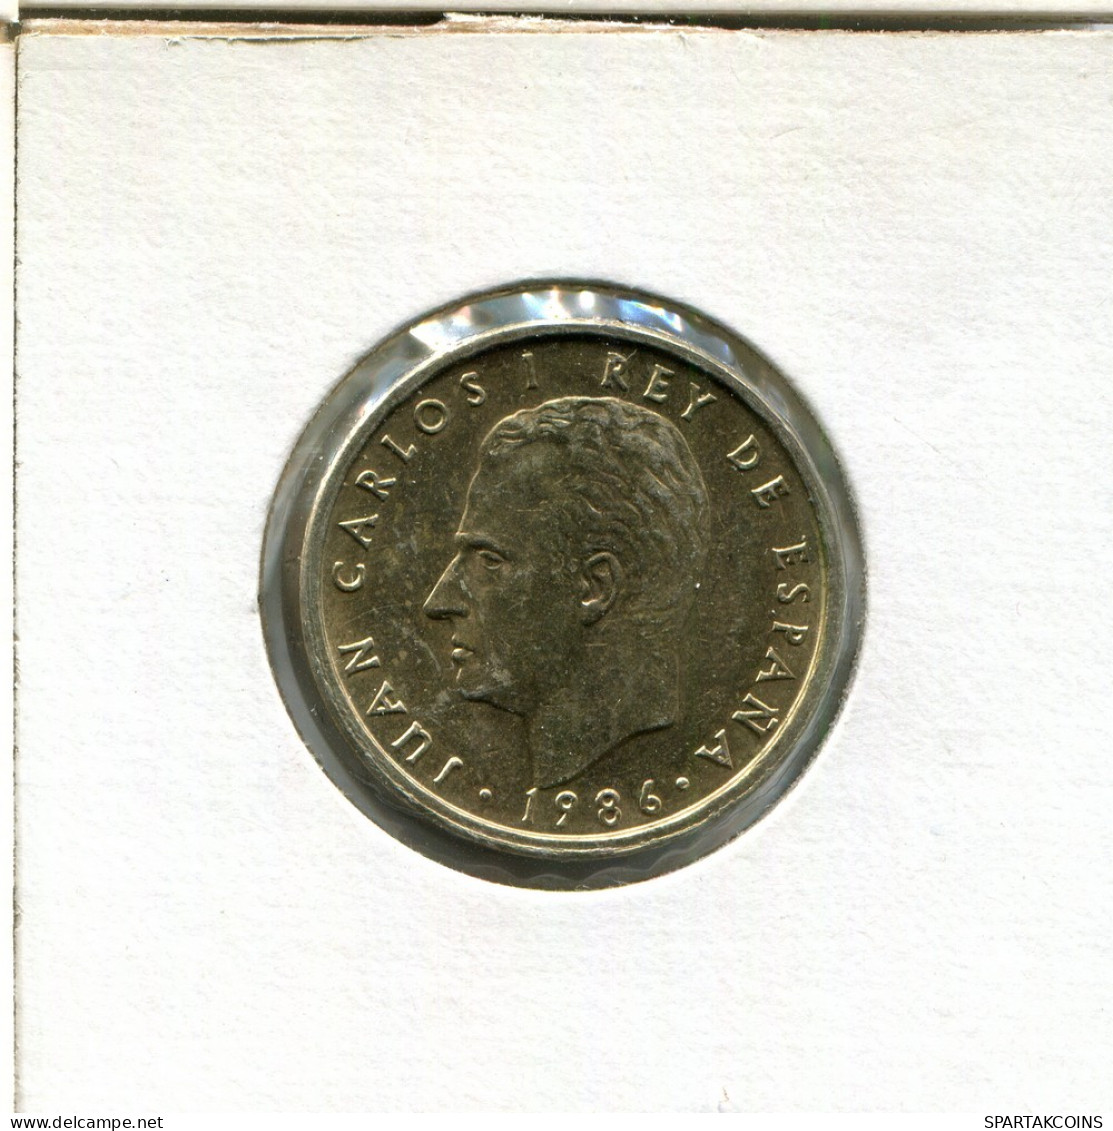 100 PESETAS 1986 SPAIN Coin #AT933.U - 100 Pesetas